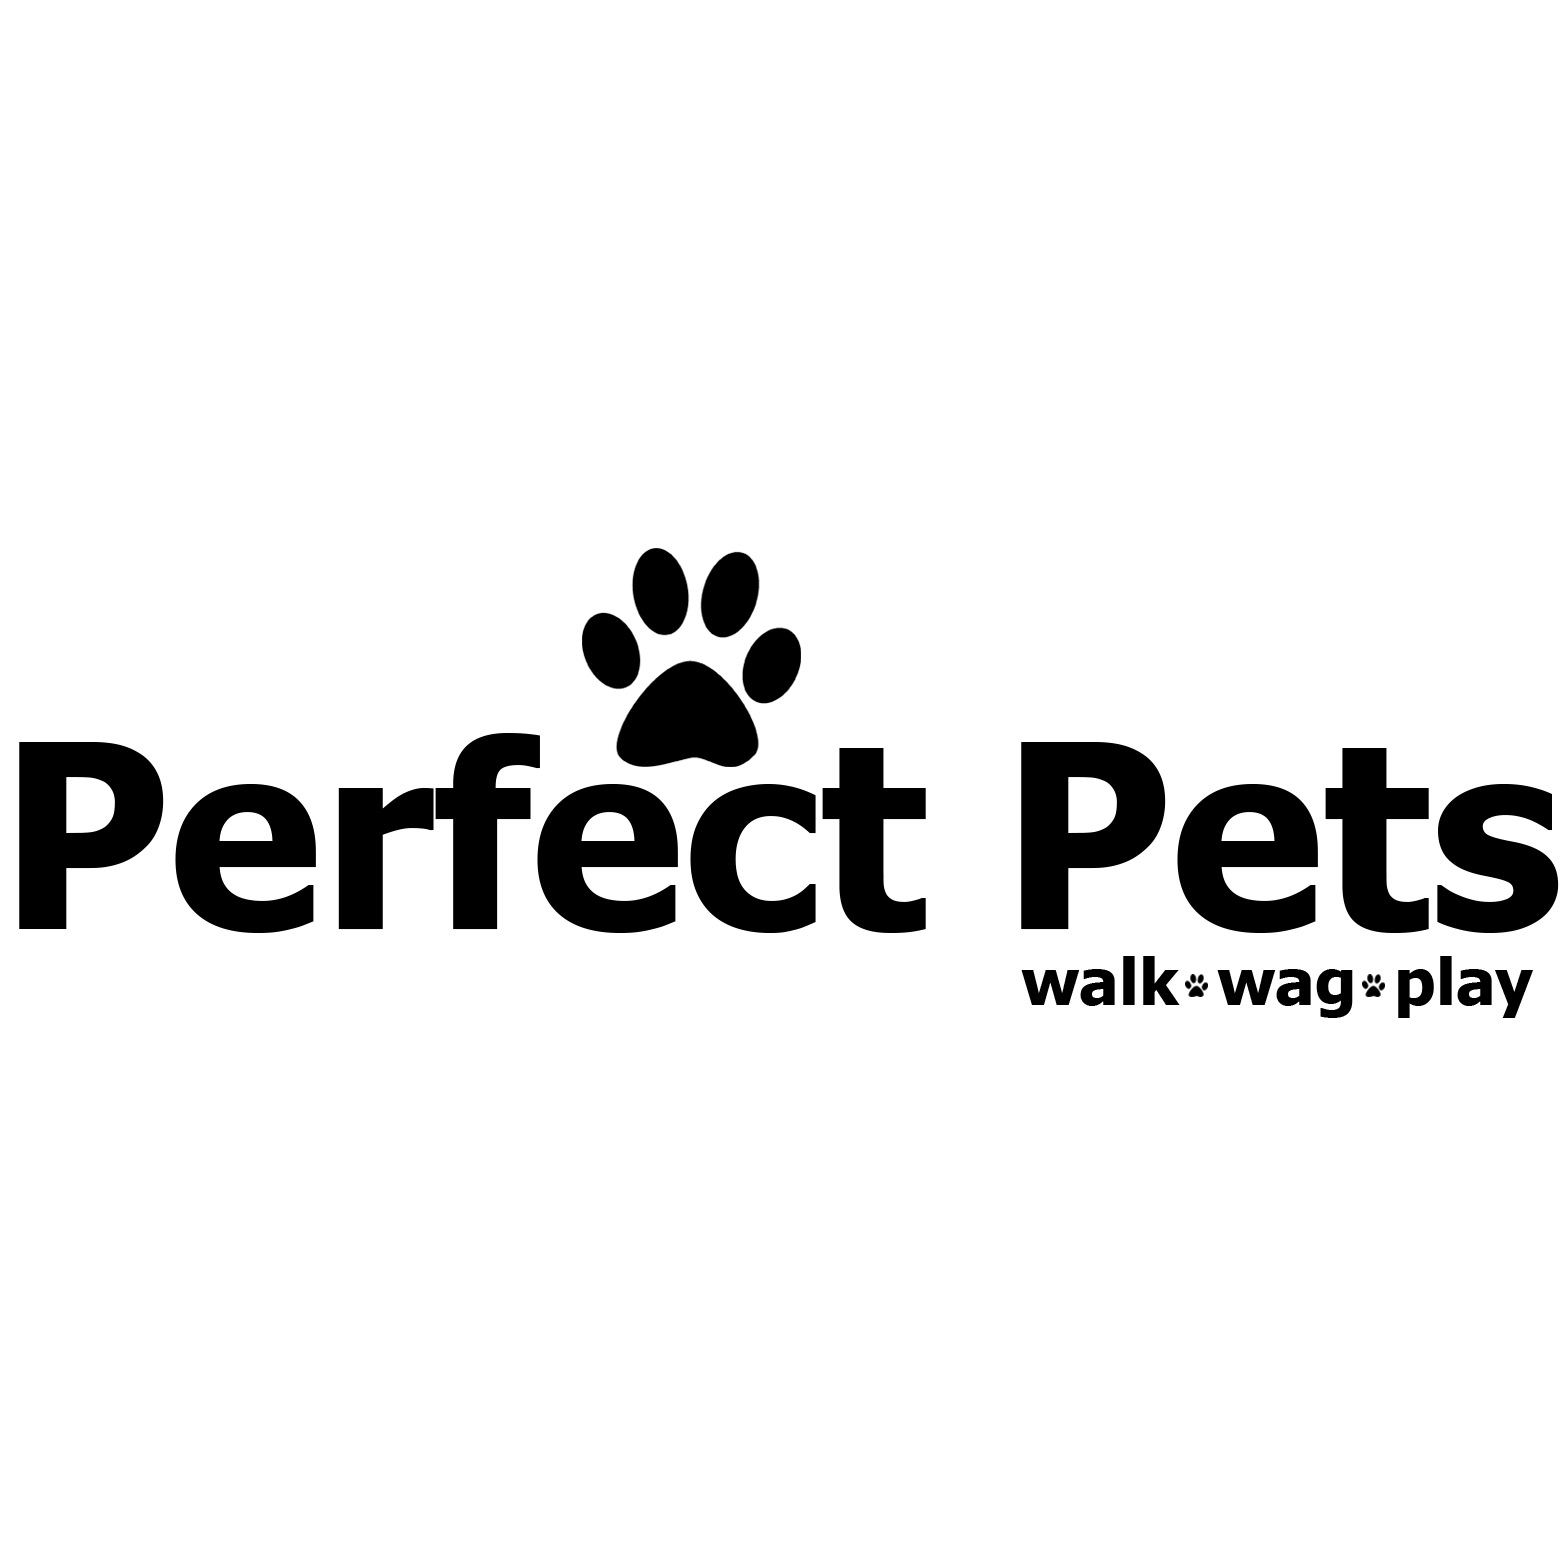 Pet perfect